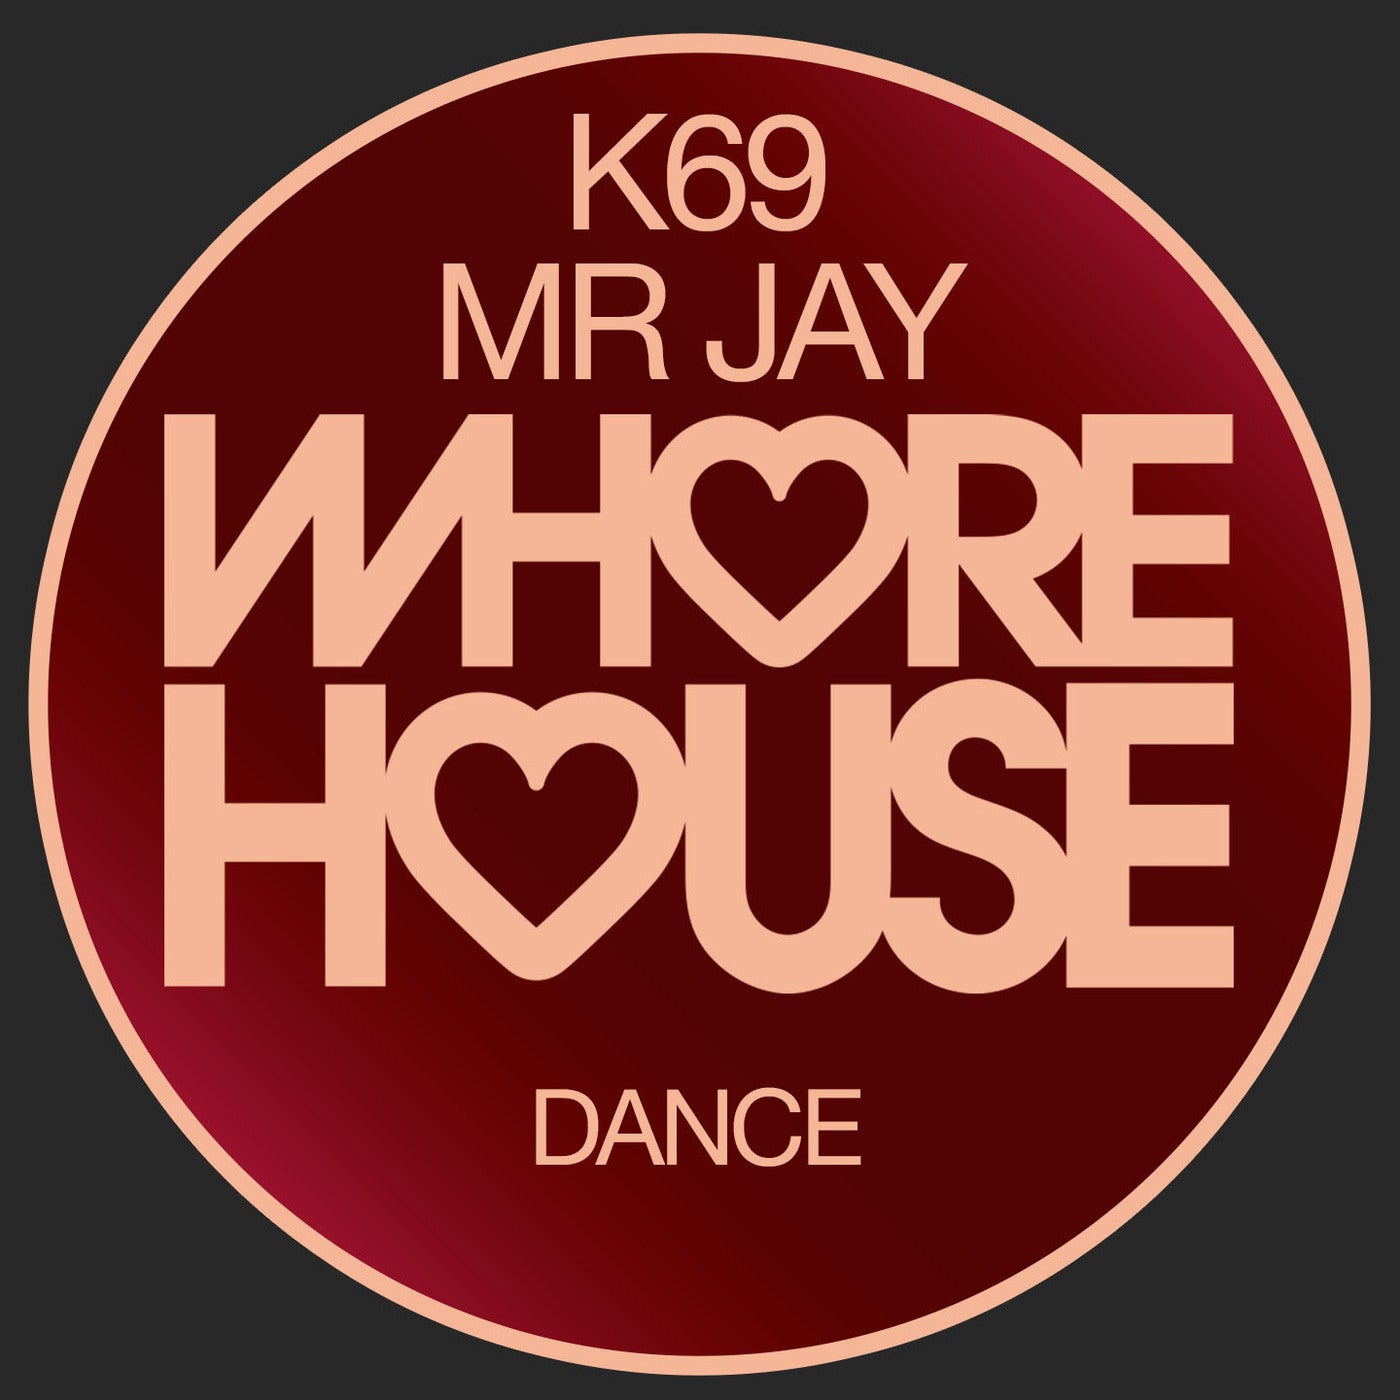 K69, Mr Jay - Dance (Original Mix)